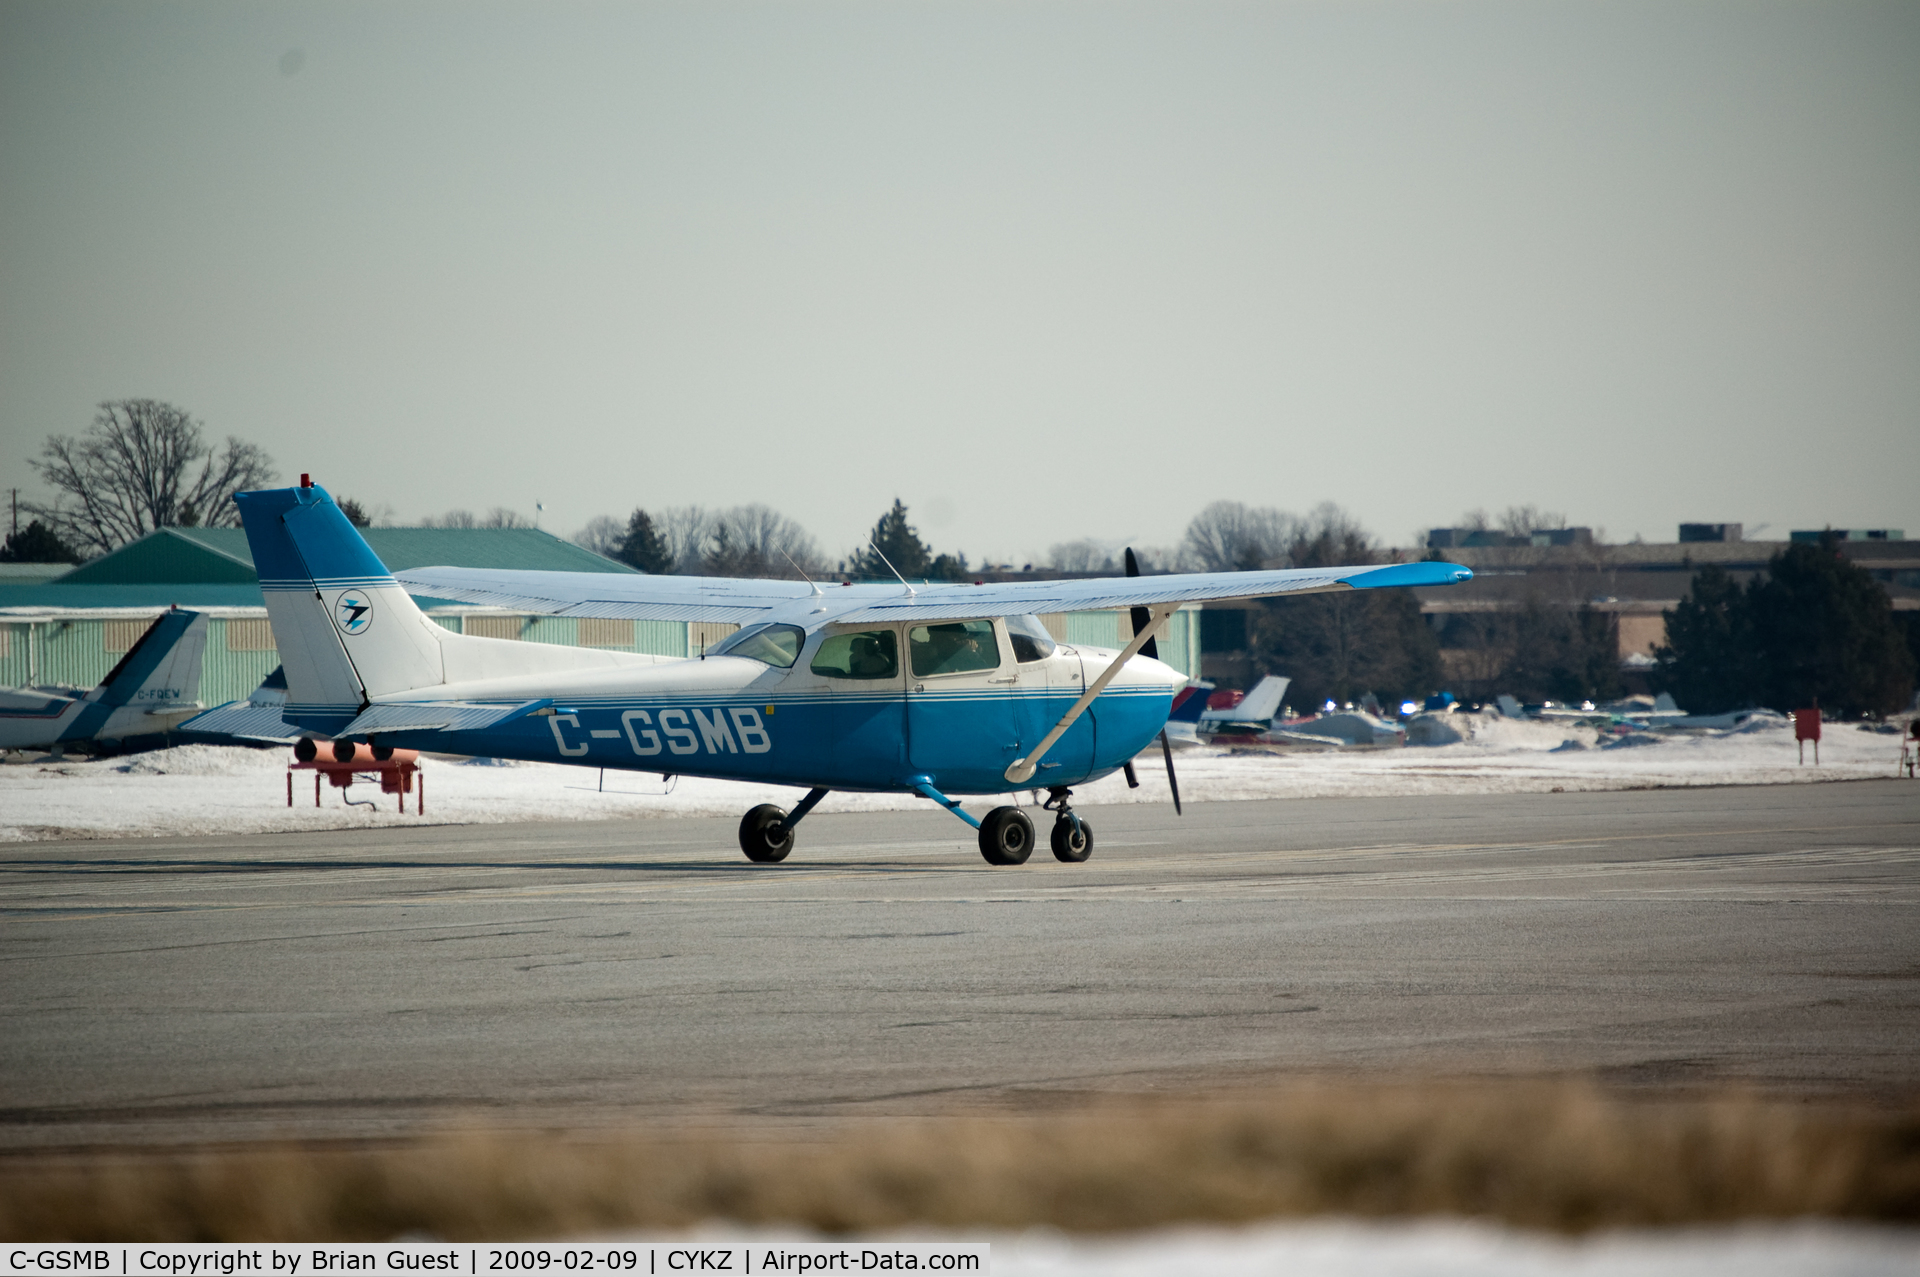 C-GSMB, 1975 Cessna 172M C/N 17265751, Taken at Toronto/Buttonville Municipal Airport